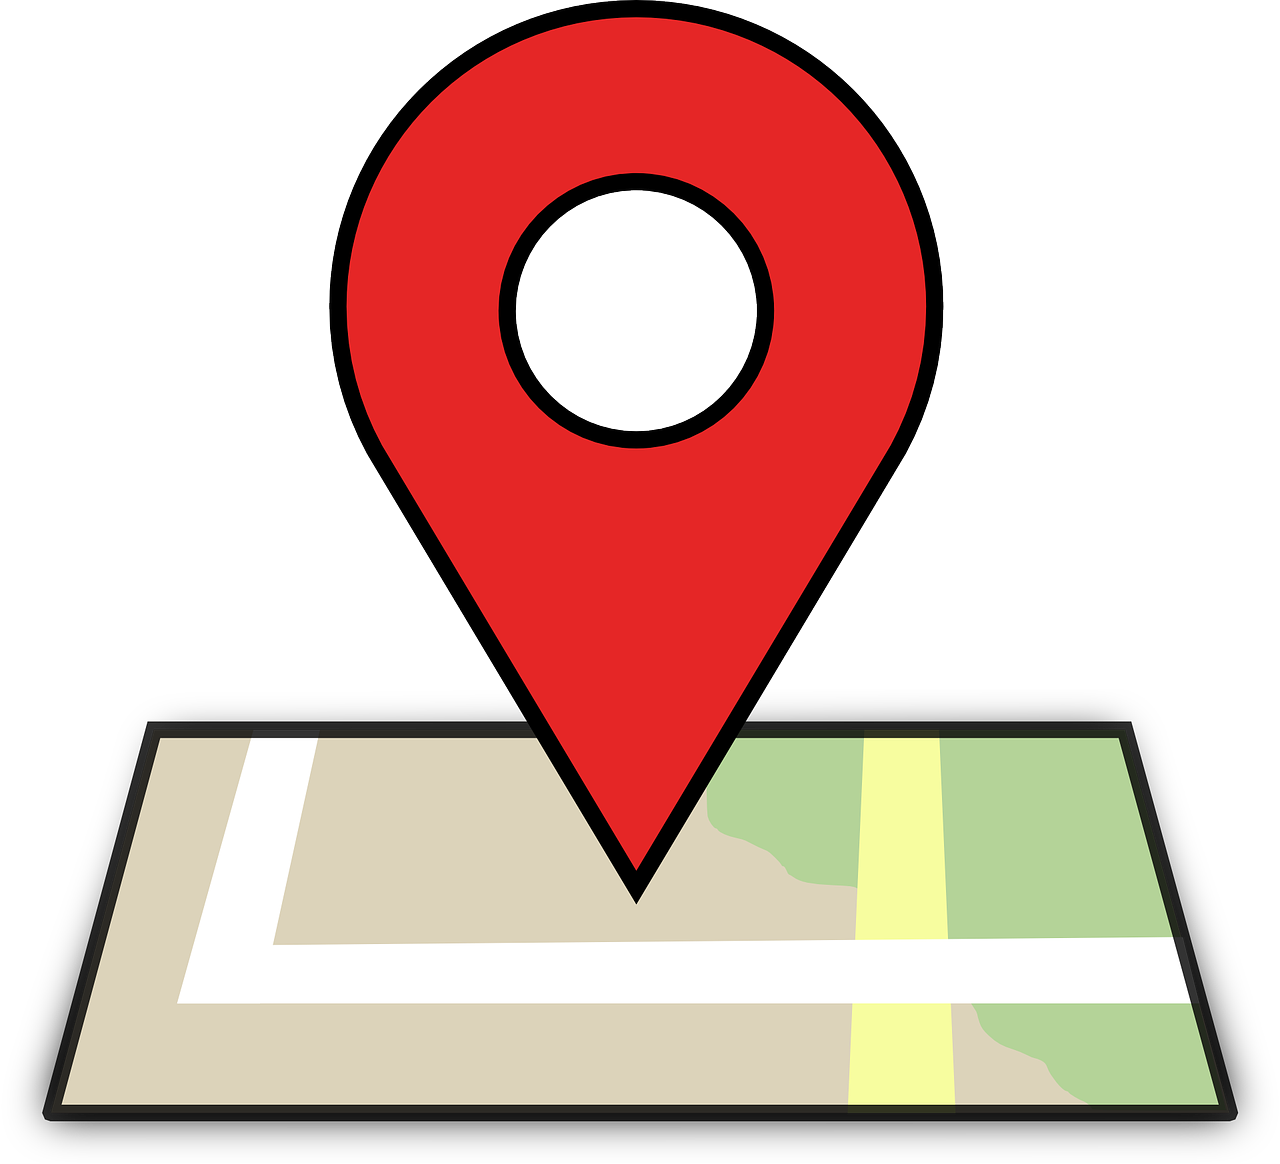 Location icon on Google map